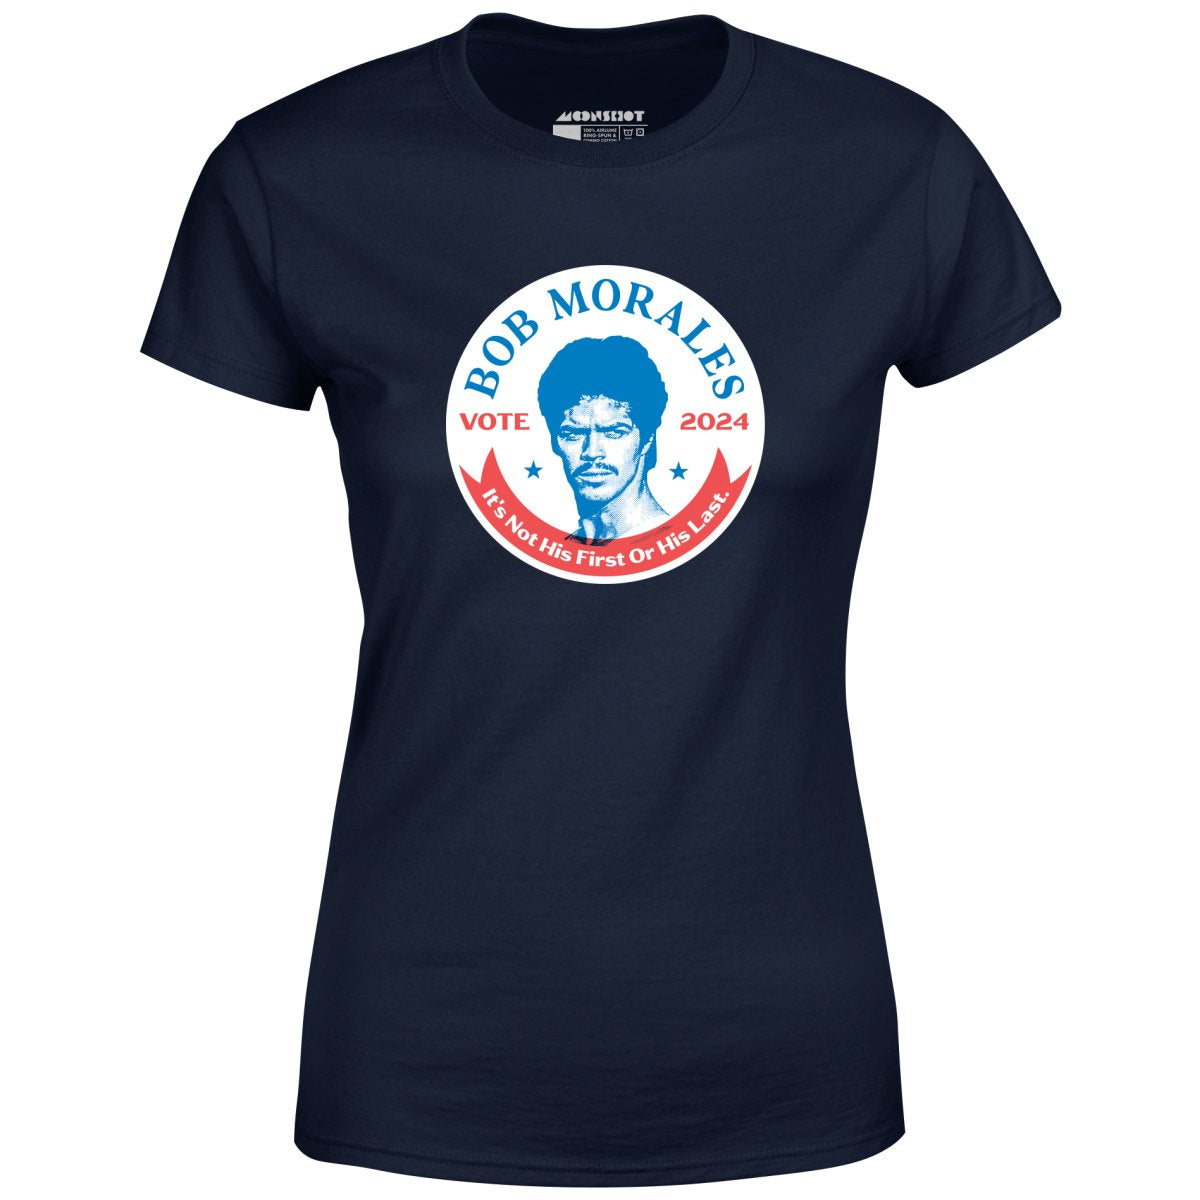 Bob Morales 2024 - Women's T-Shirt